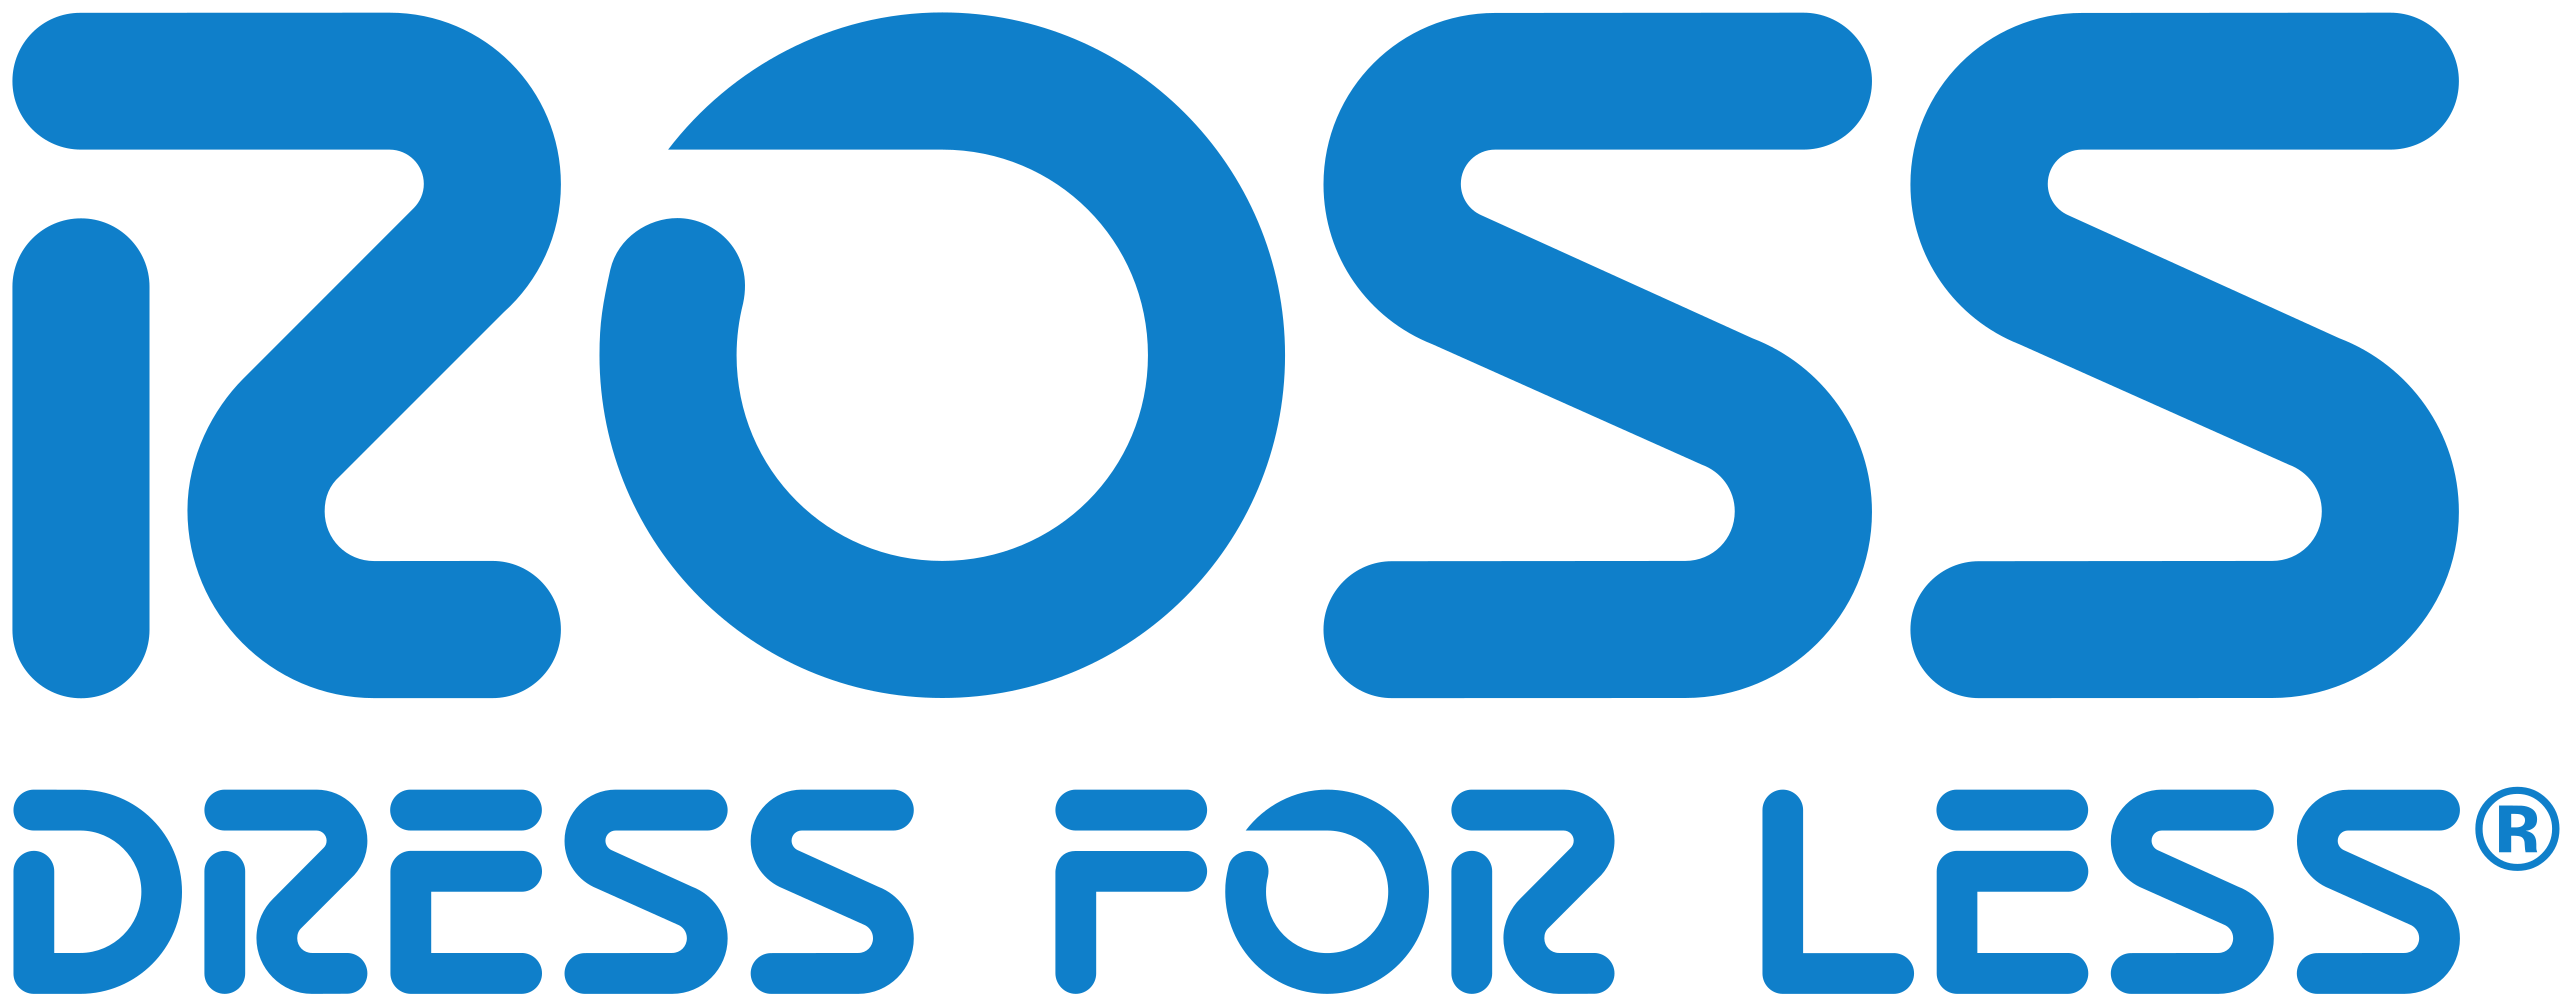 Ross_Stores_logo.svg